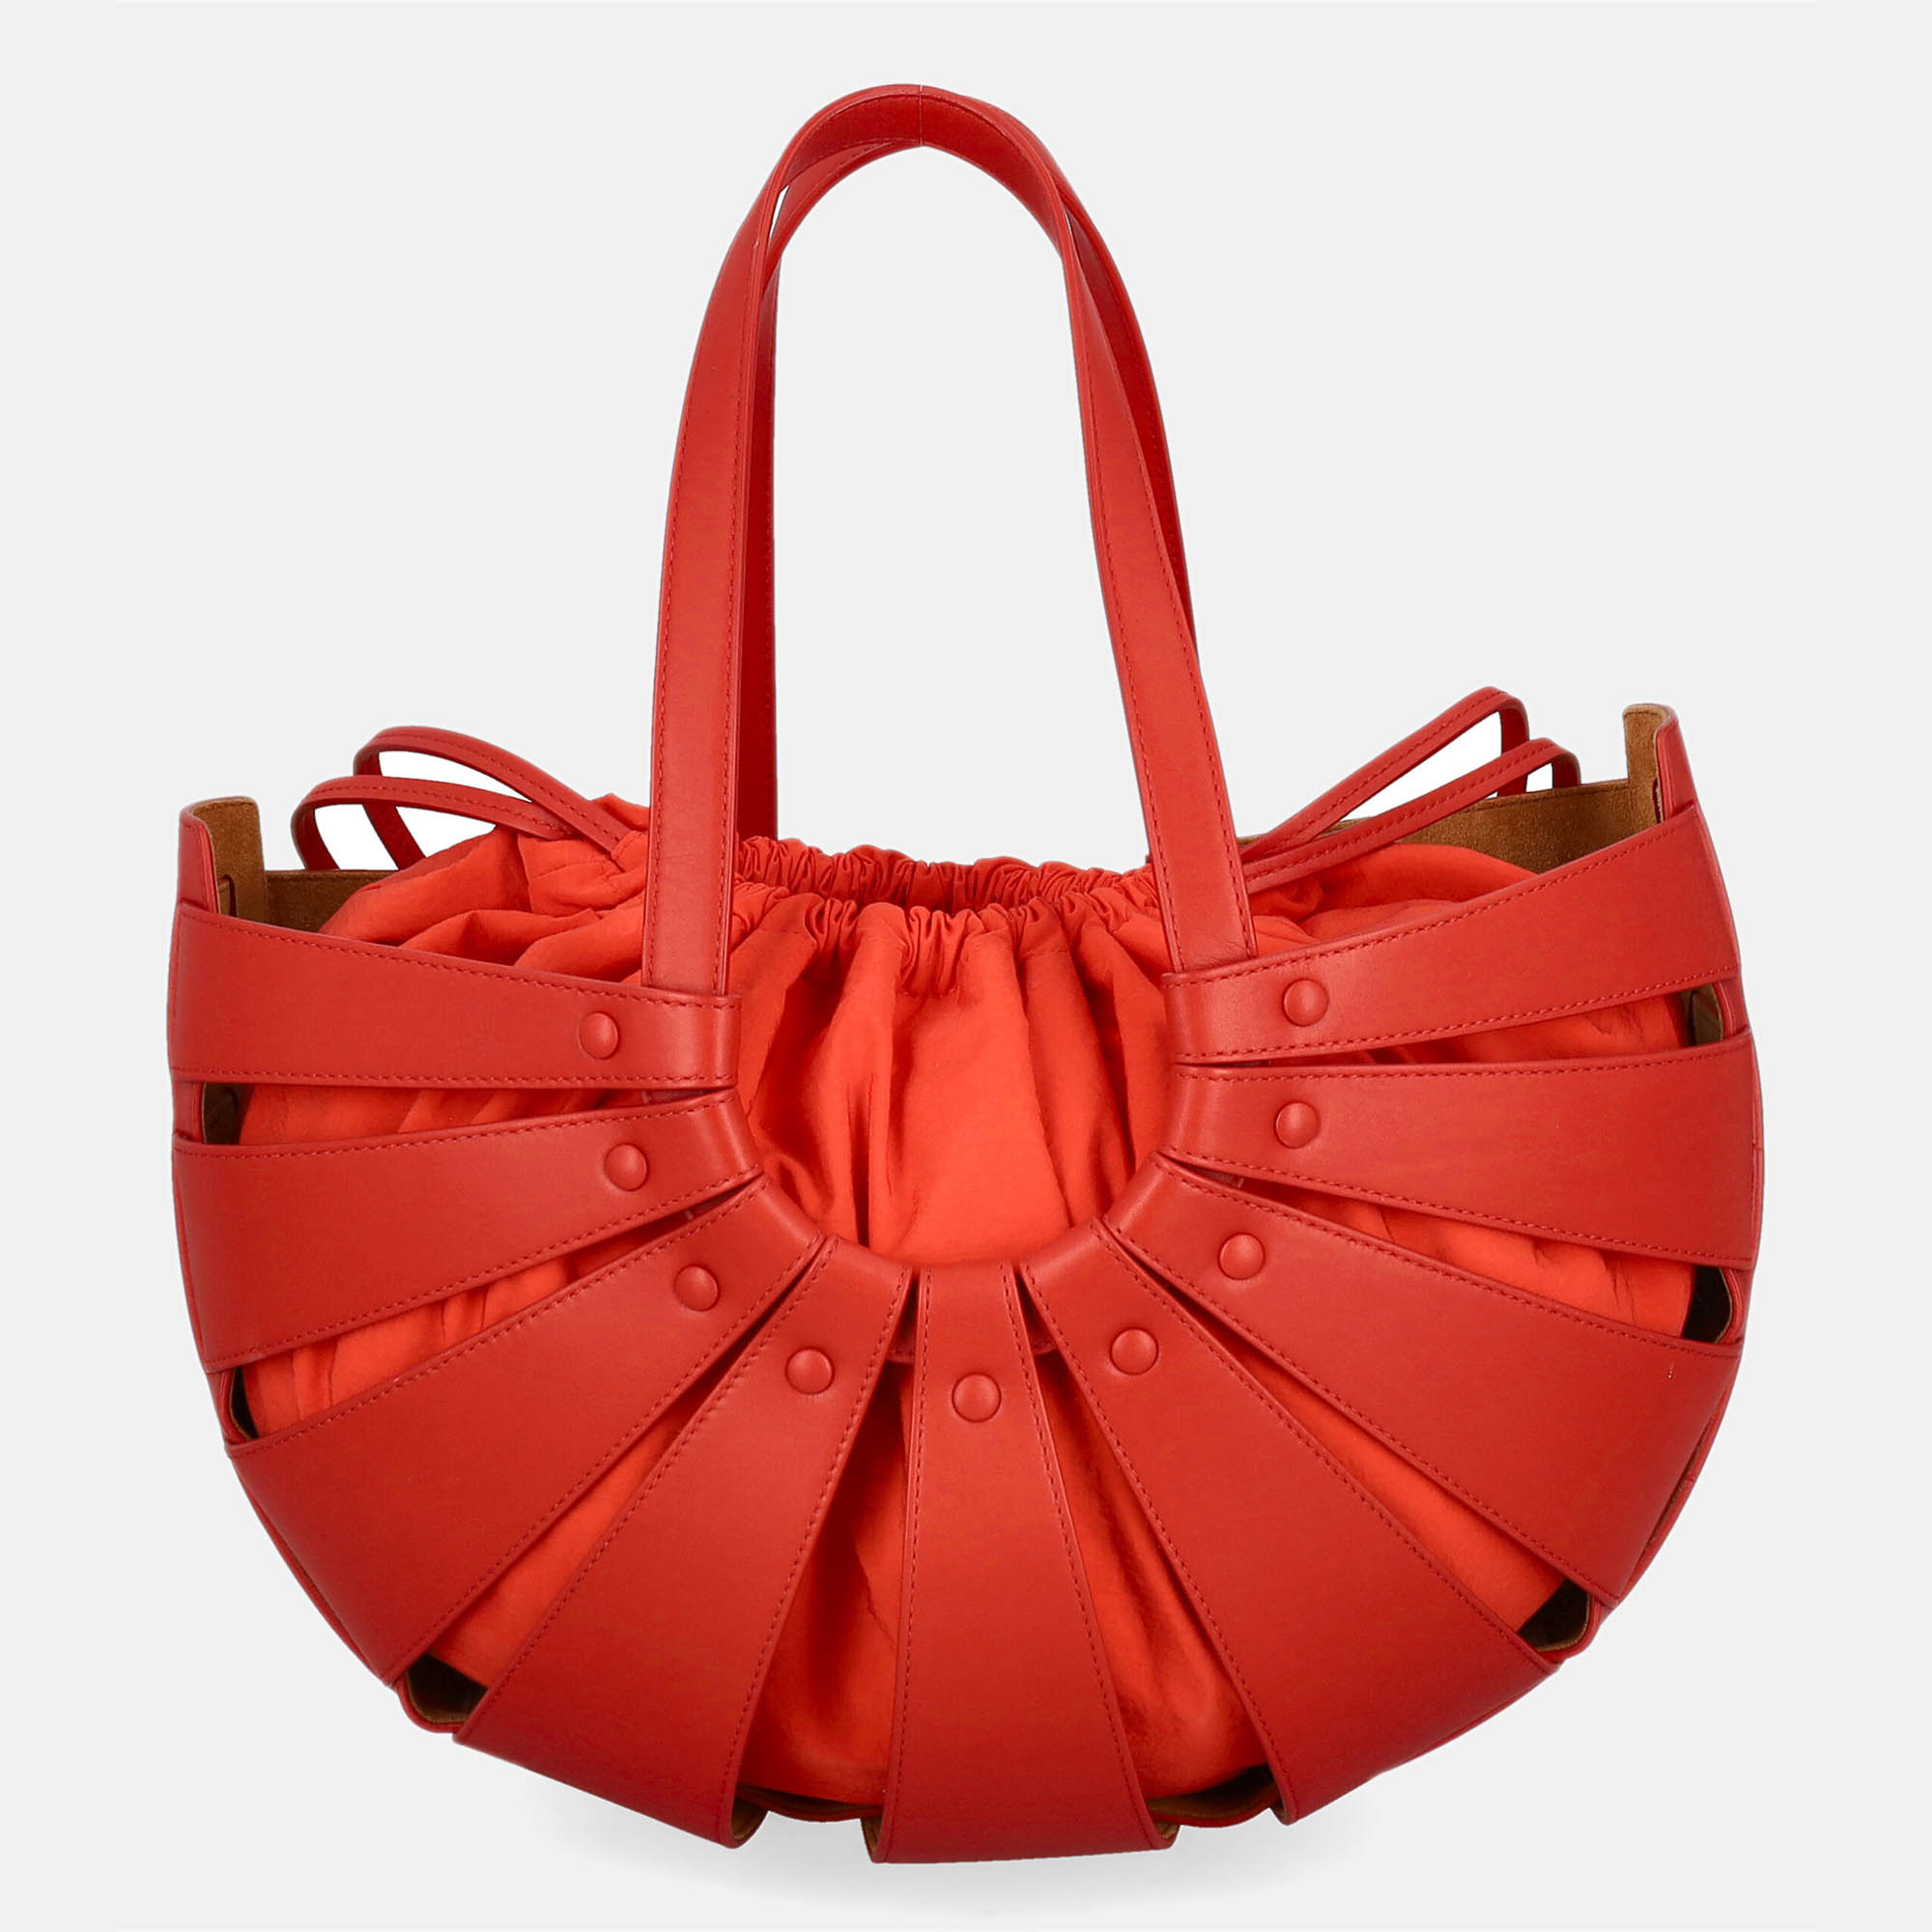 Bottega Veneta  Women's Leather Handbag - Red - One Size